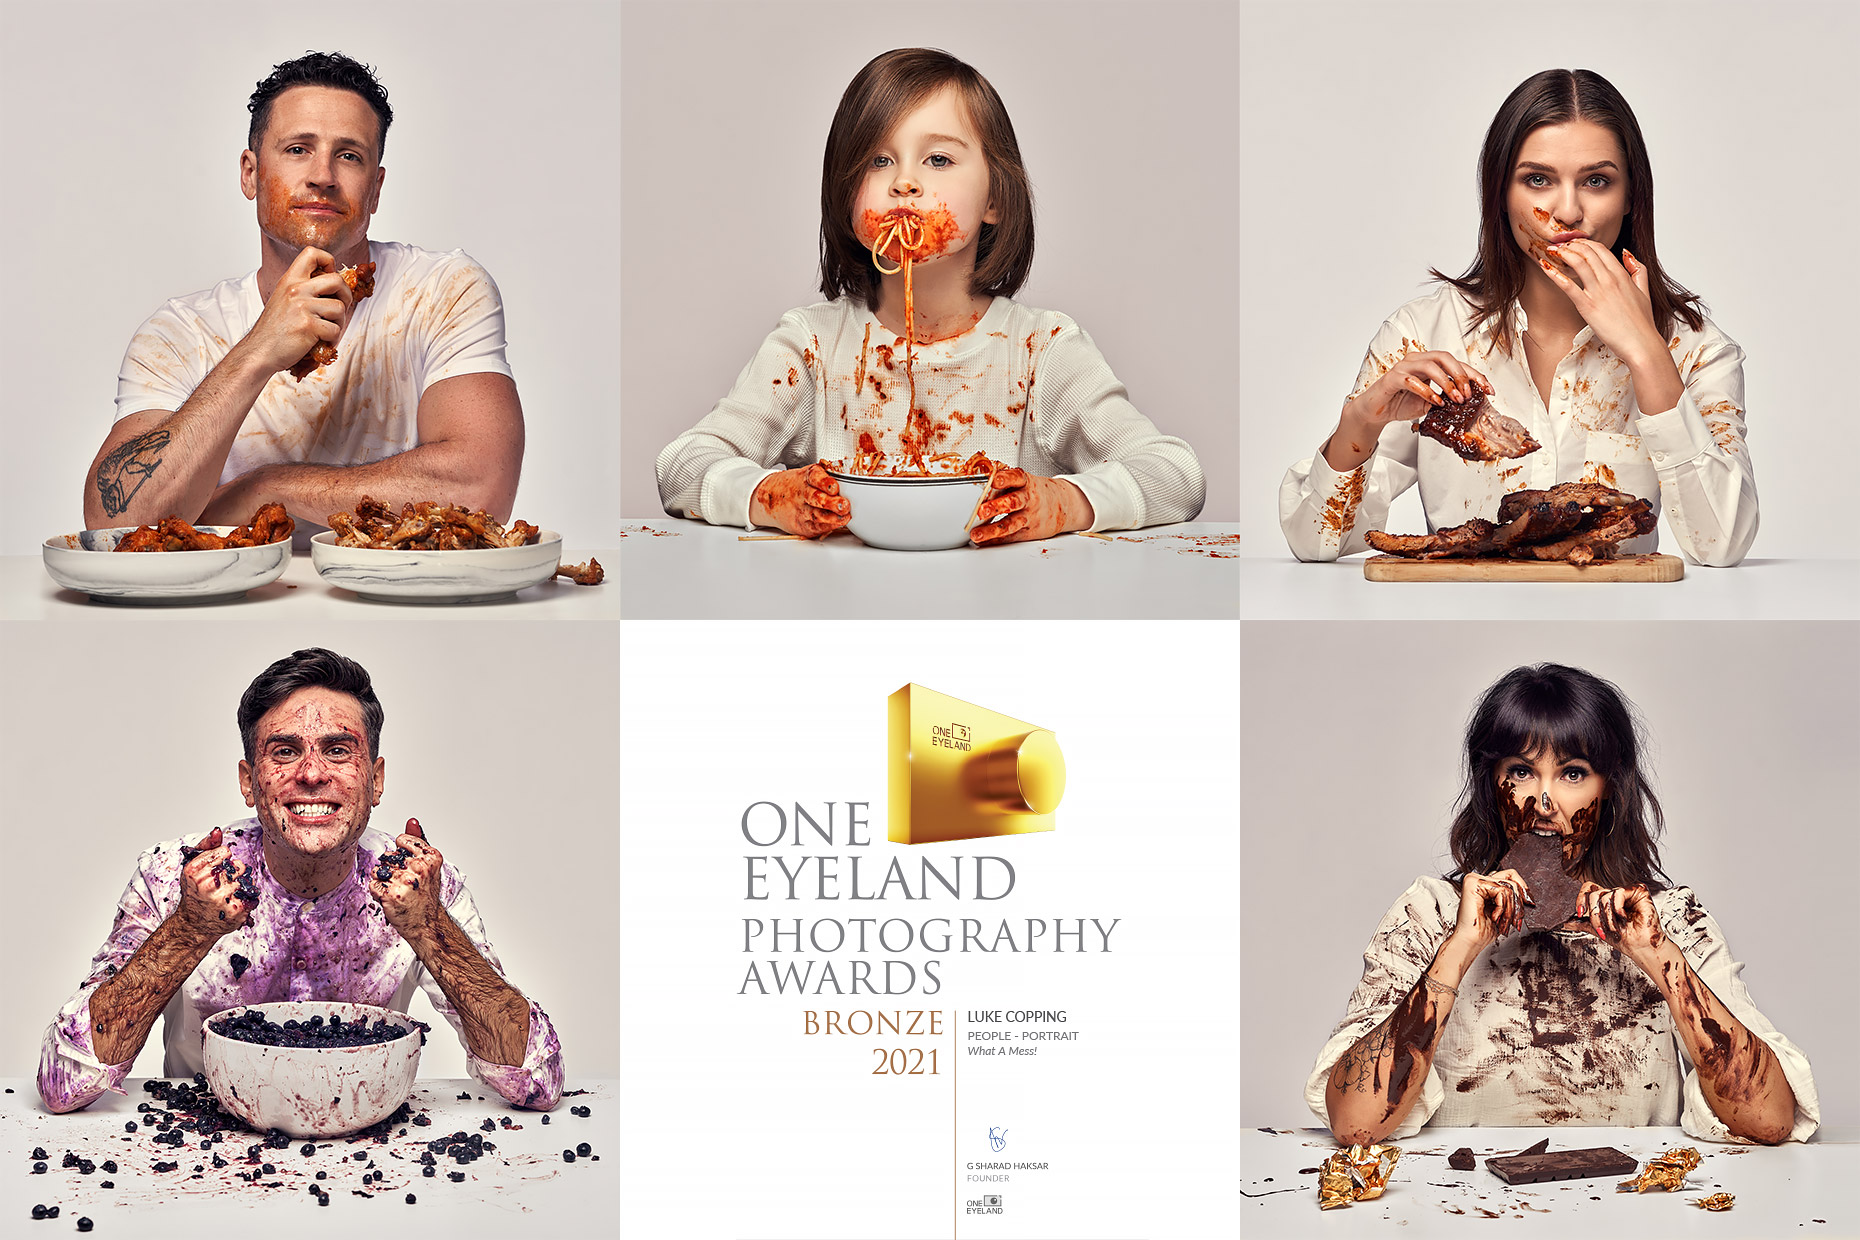 One Eyelid Award winning images from Luke Copping's Messy Food Series, BUffalo NY